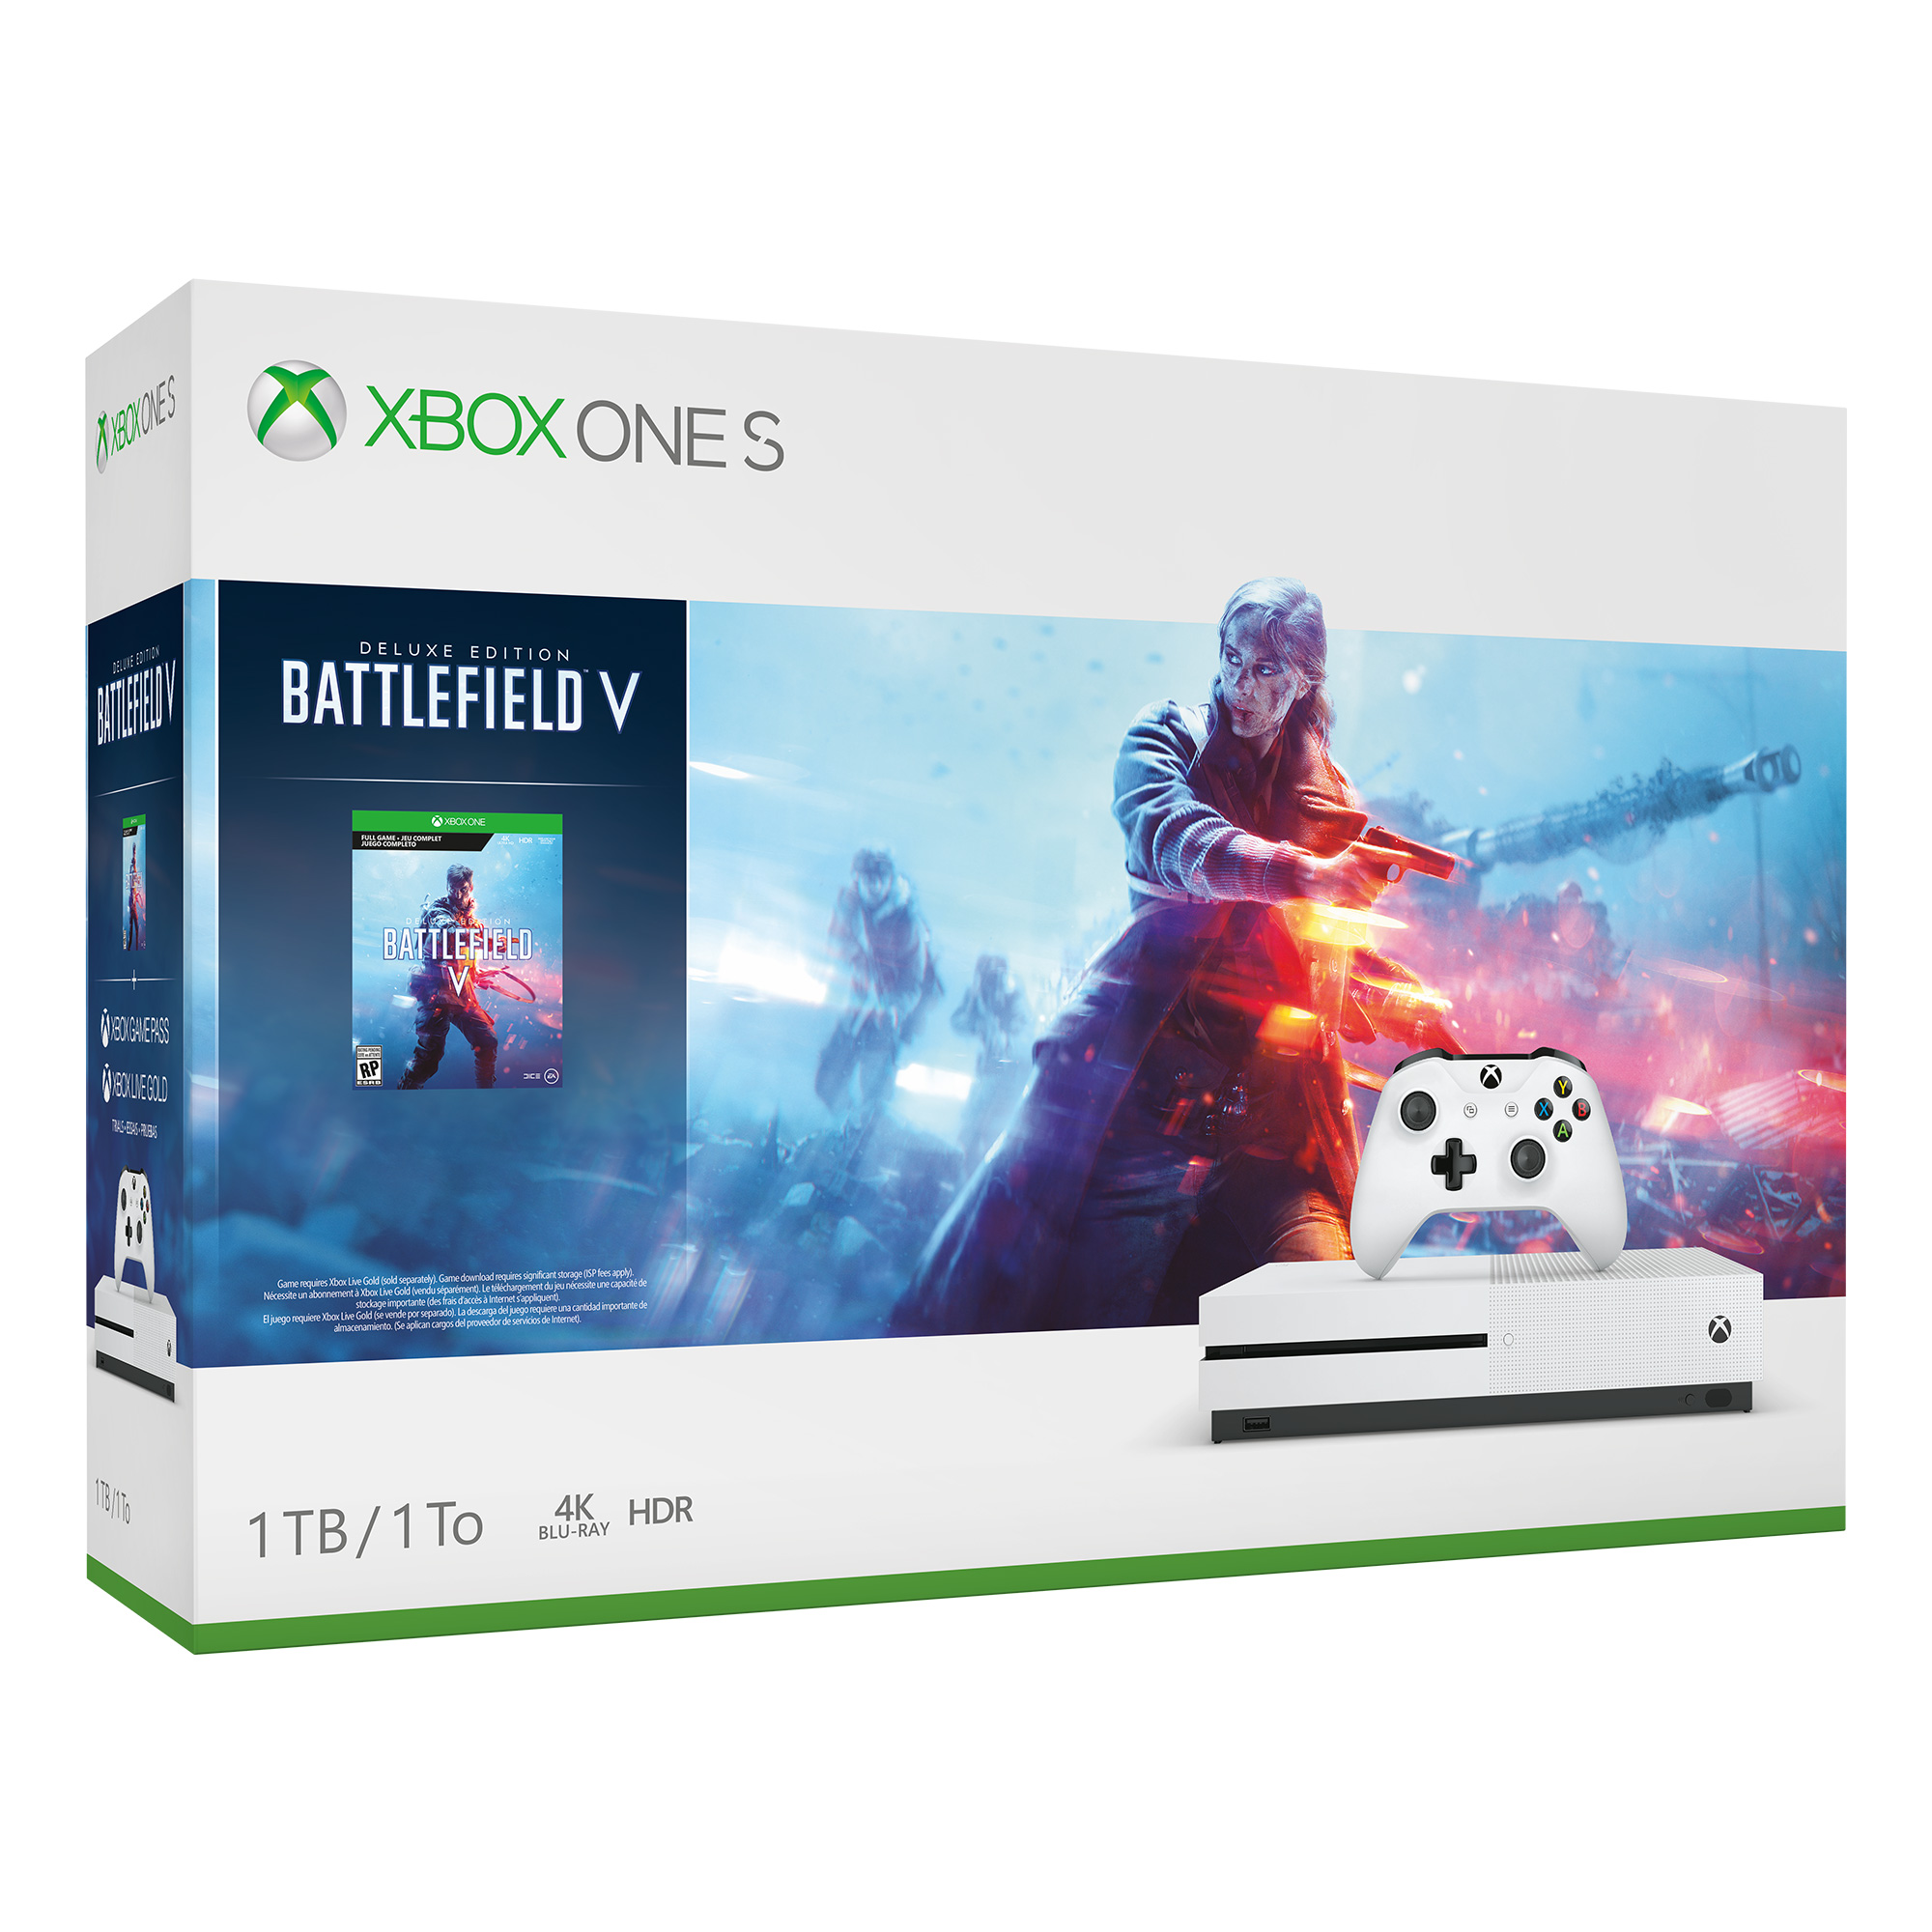 Microsoft Xbox One S 1TB Battlefield V Bundle, White, 234-00679 - image 1 of 11